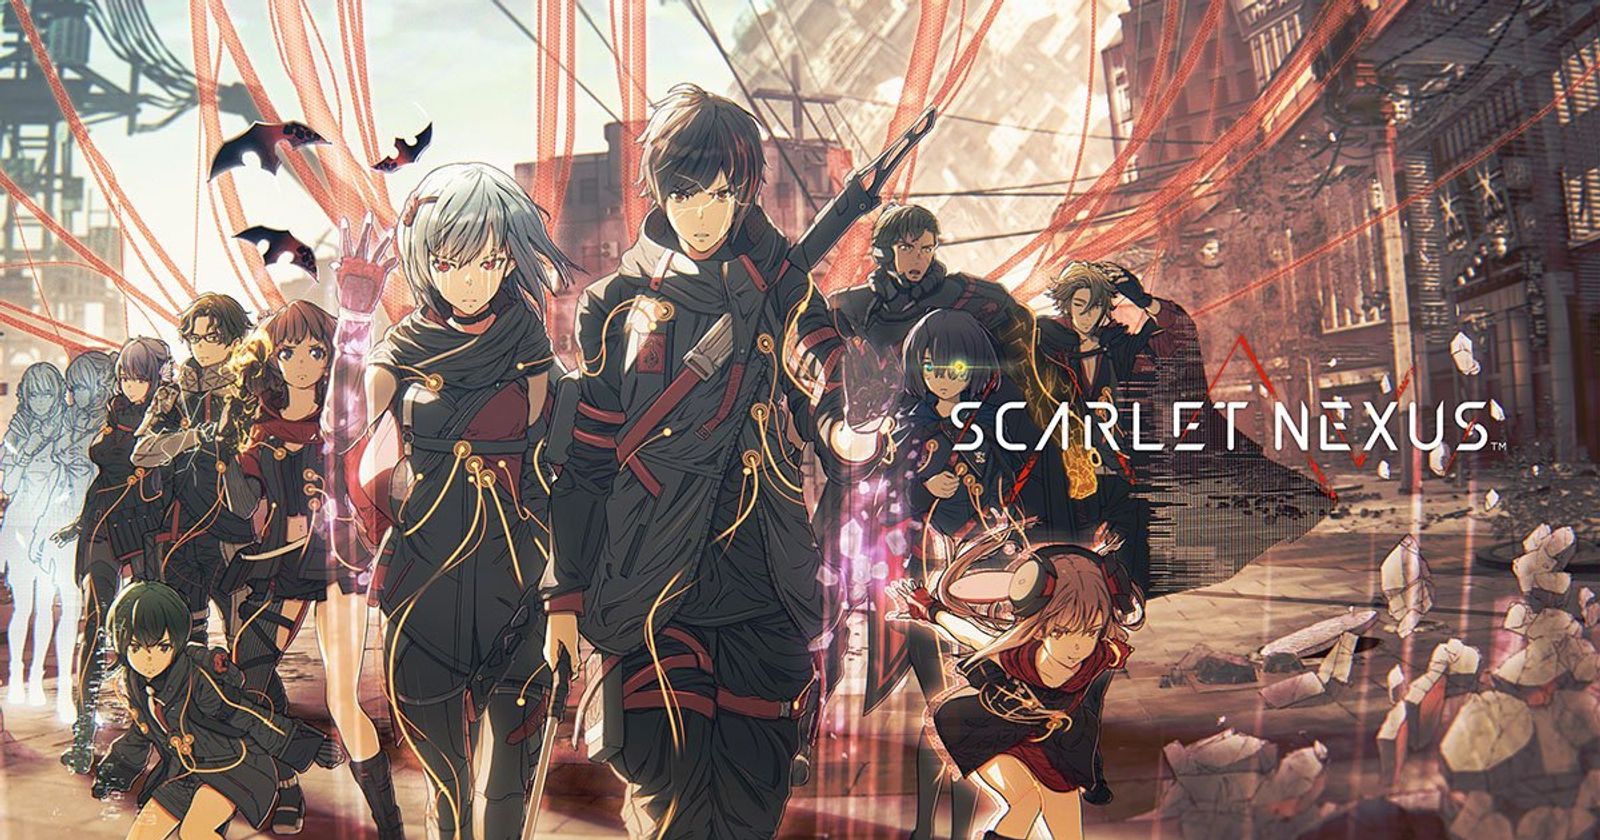 Scarlet Nexus – New Gameplay Today - Game Informer